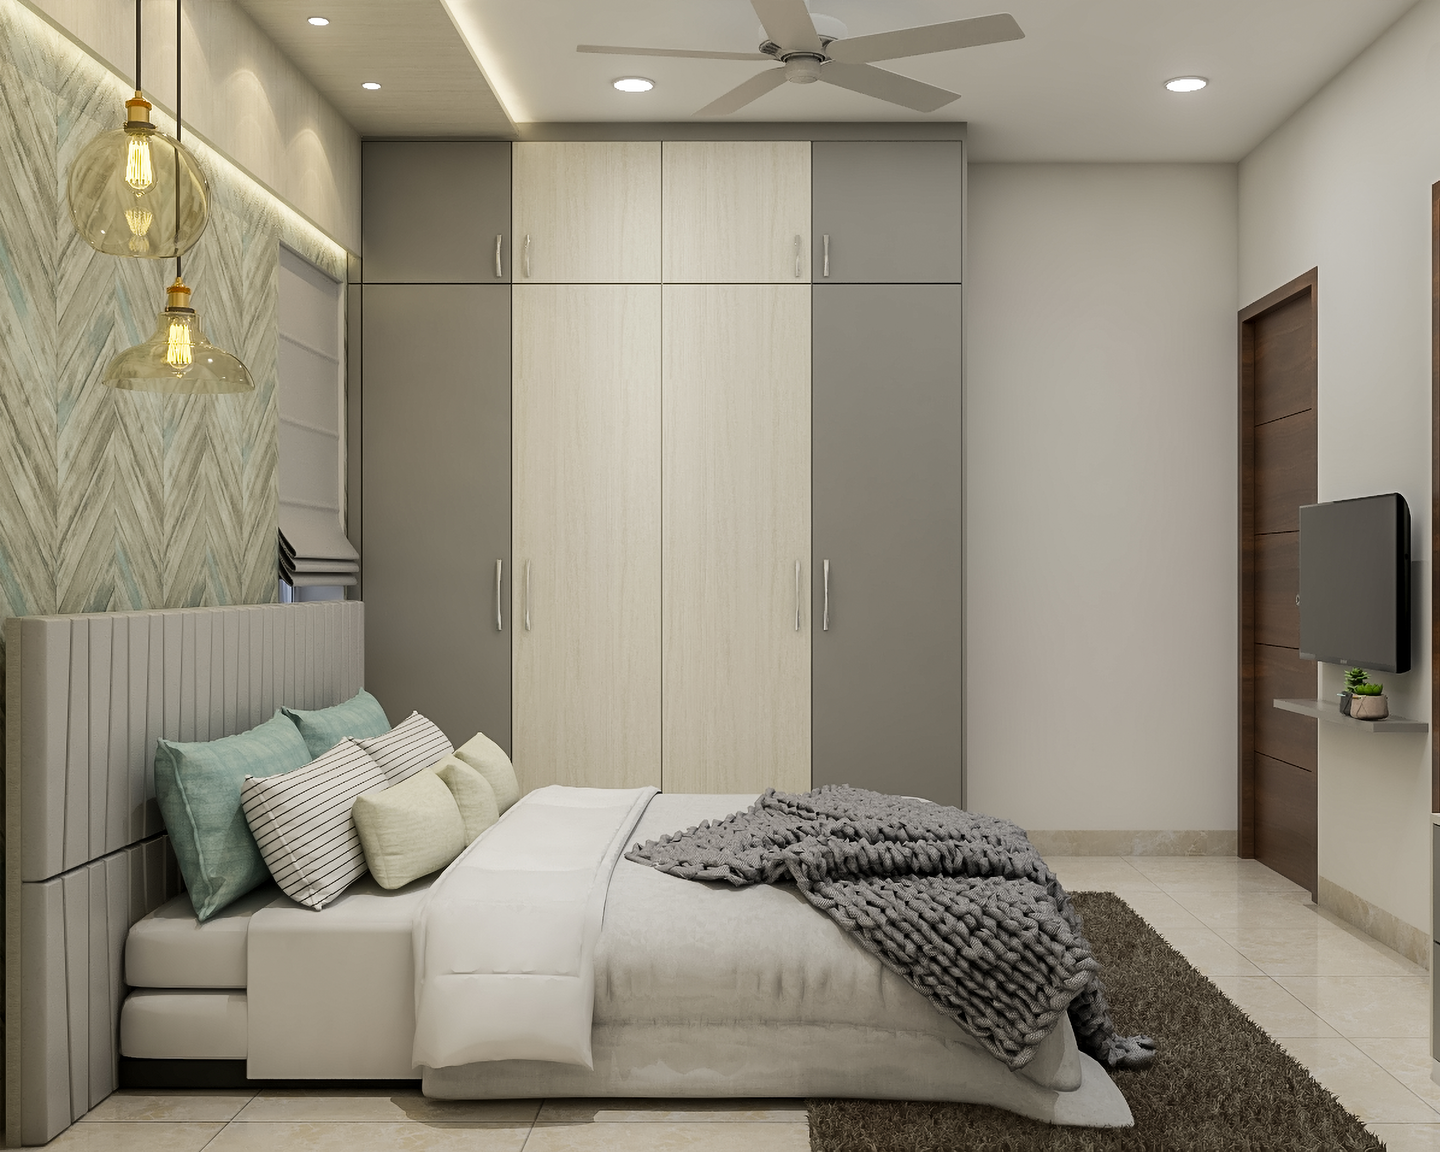 Contemporary Guest Room Design For Rental Homes - Livspace